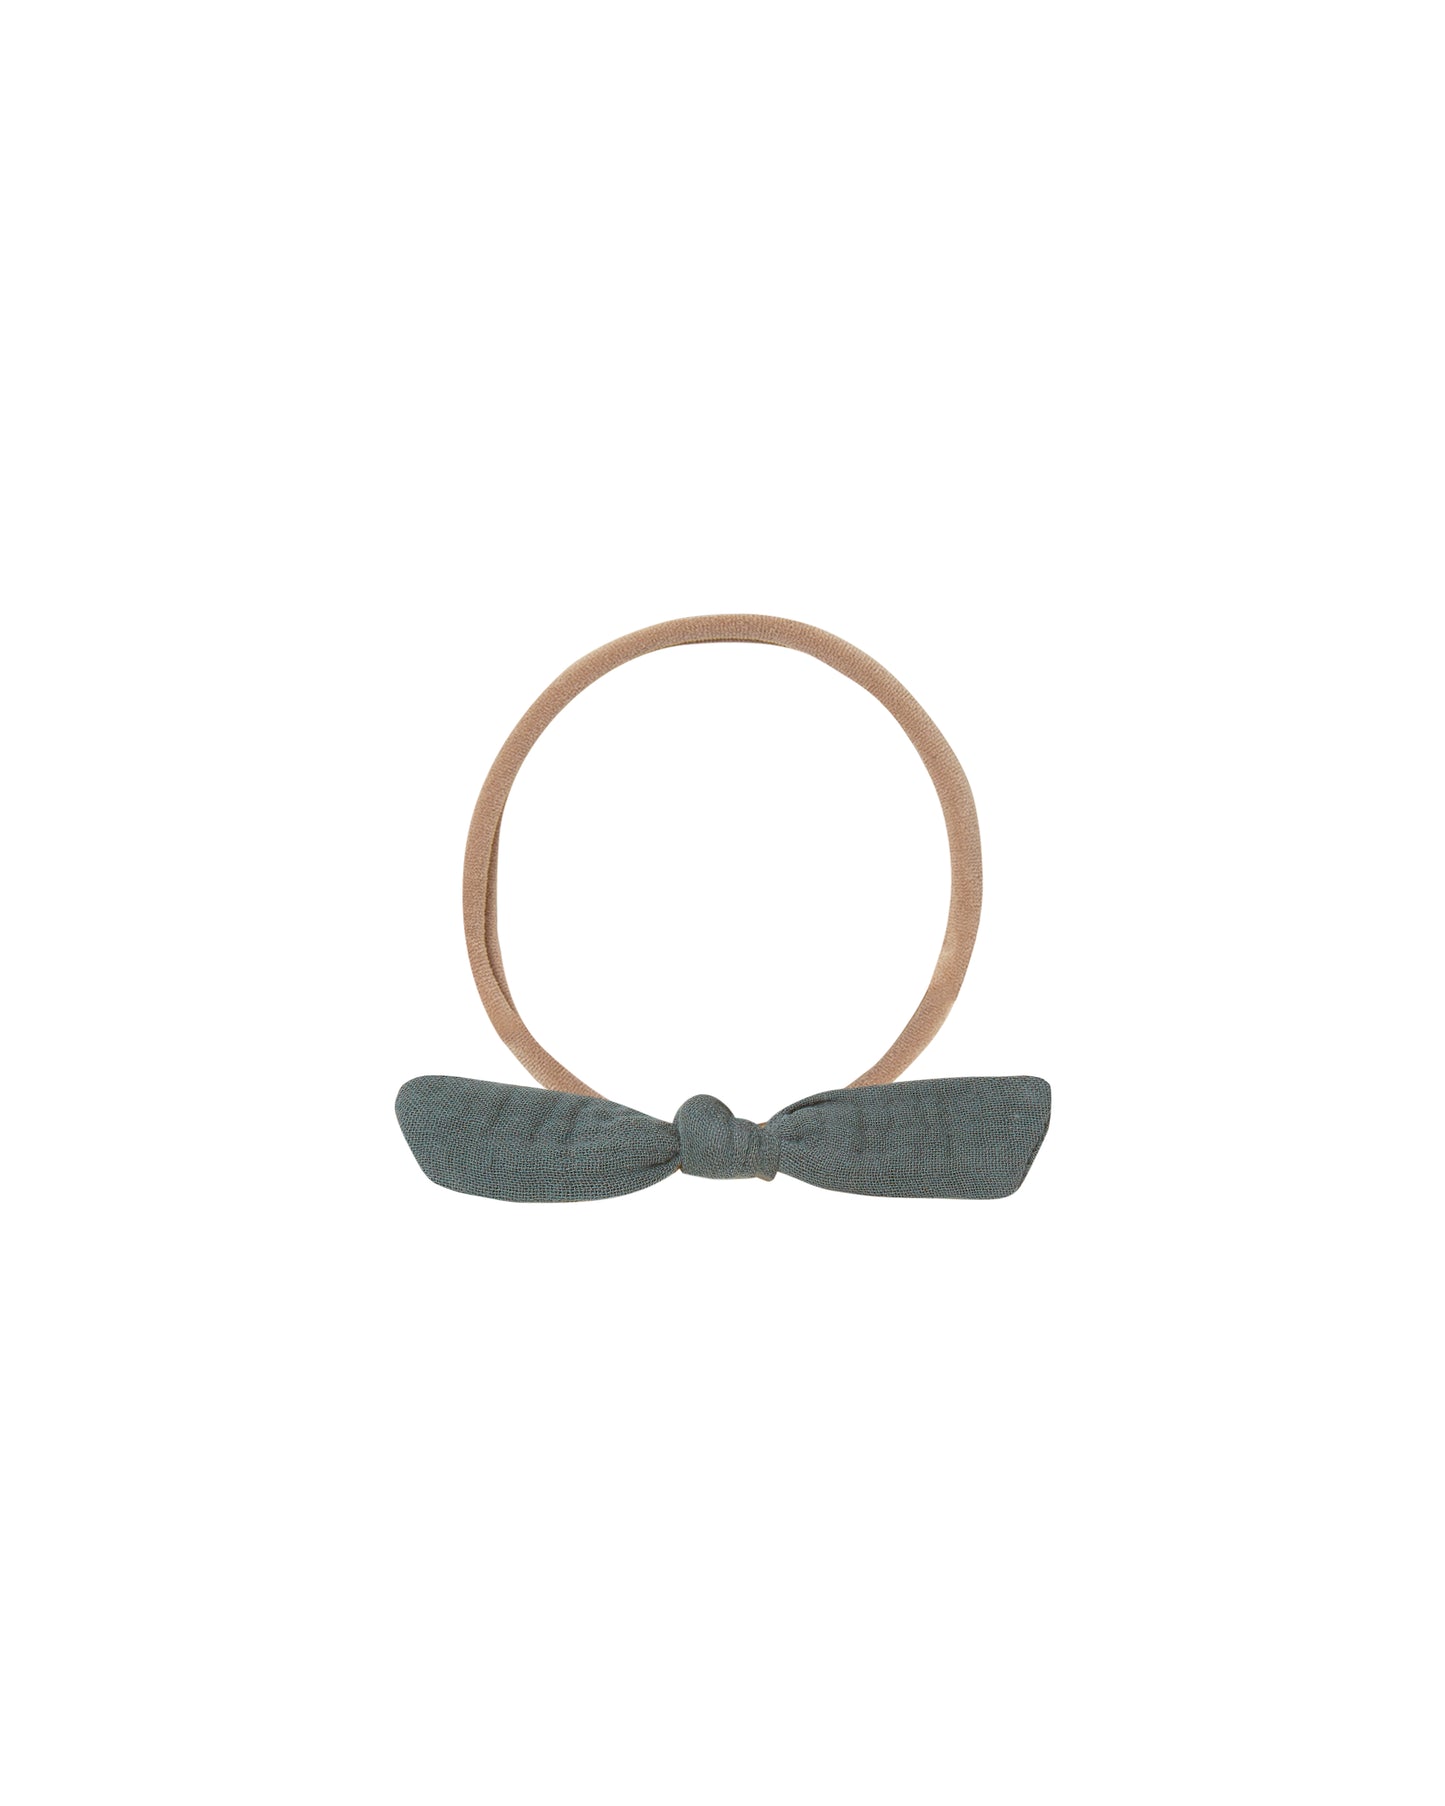 Rylee + Cru Little Knot Headband - Sea, Micro Blue or Vintage Floral